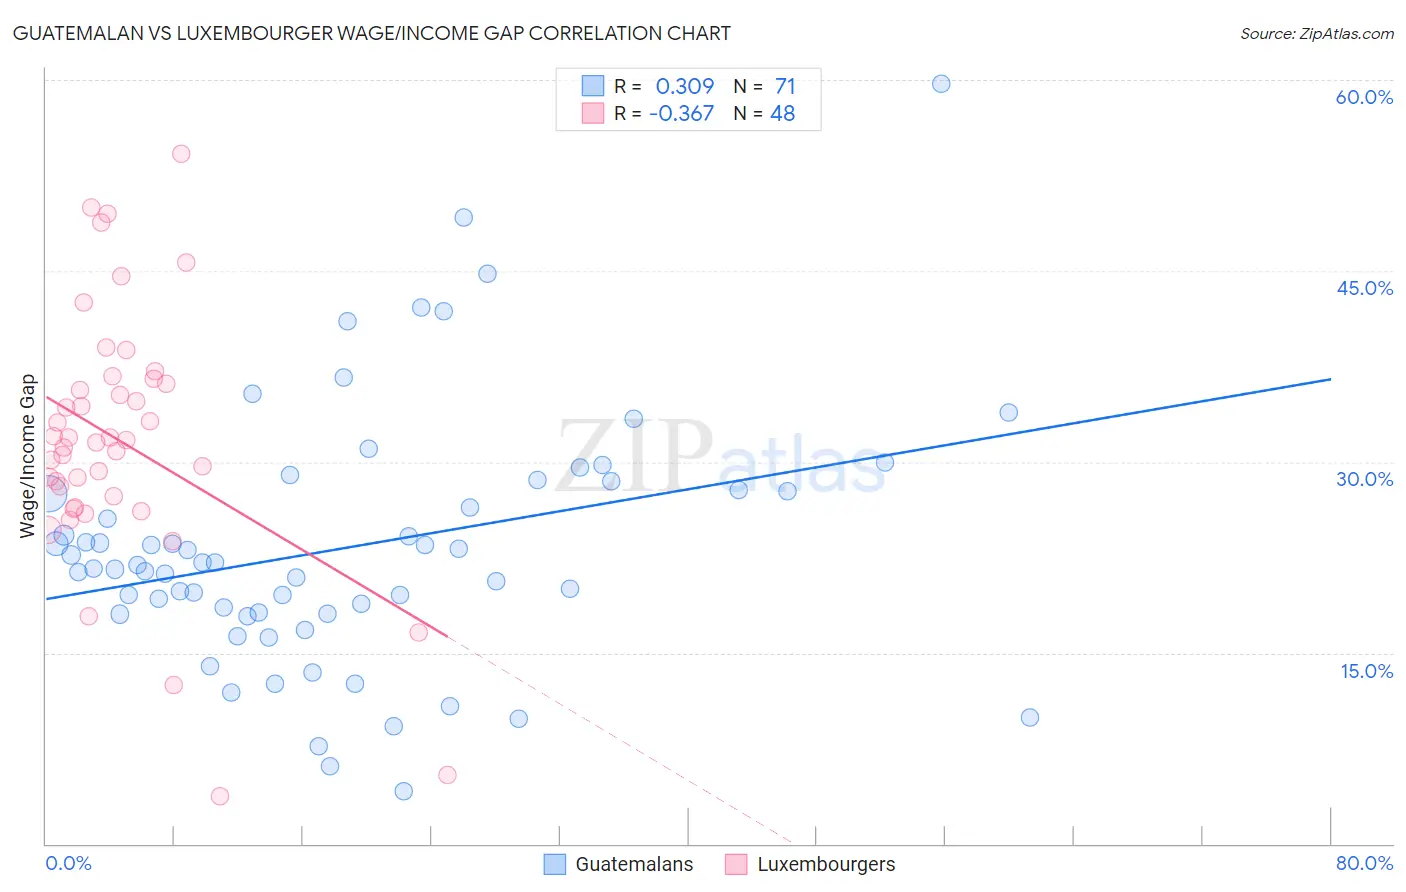 Guatemalan vs Luxembourger Wage/Income Gap